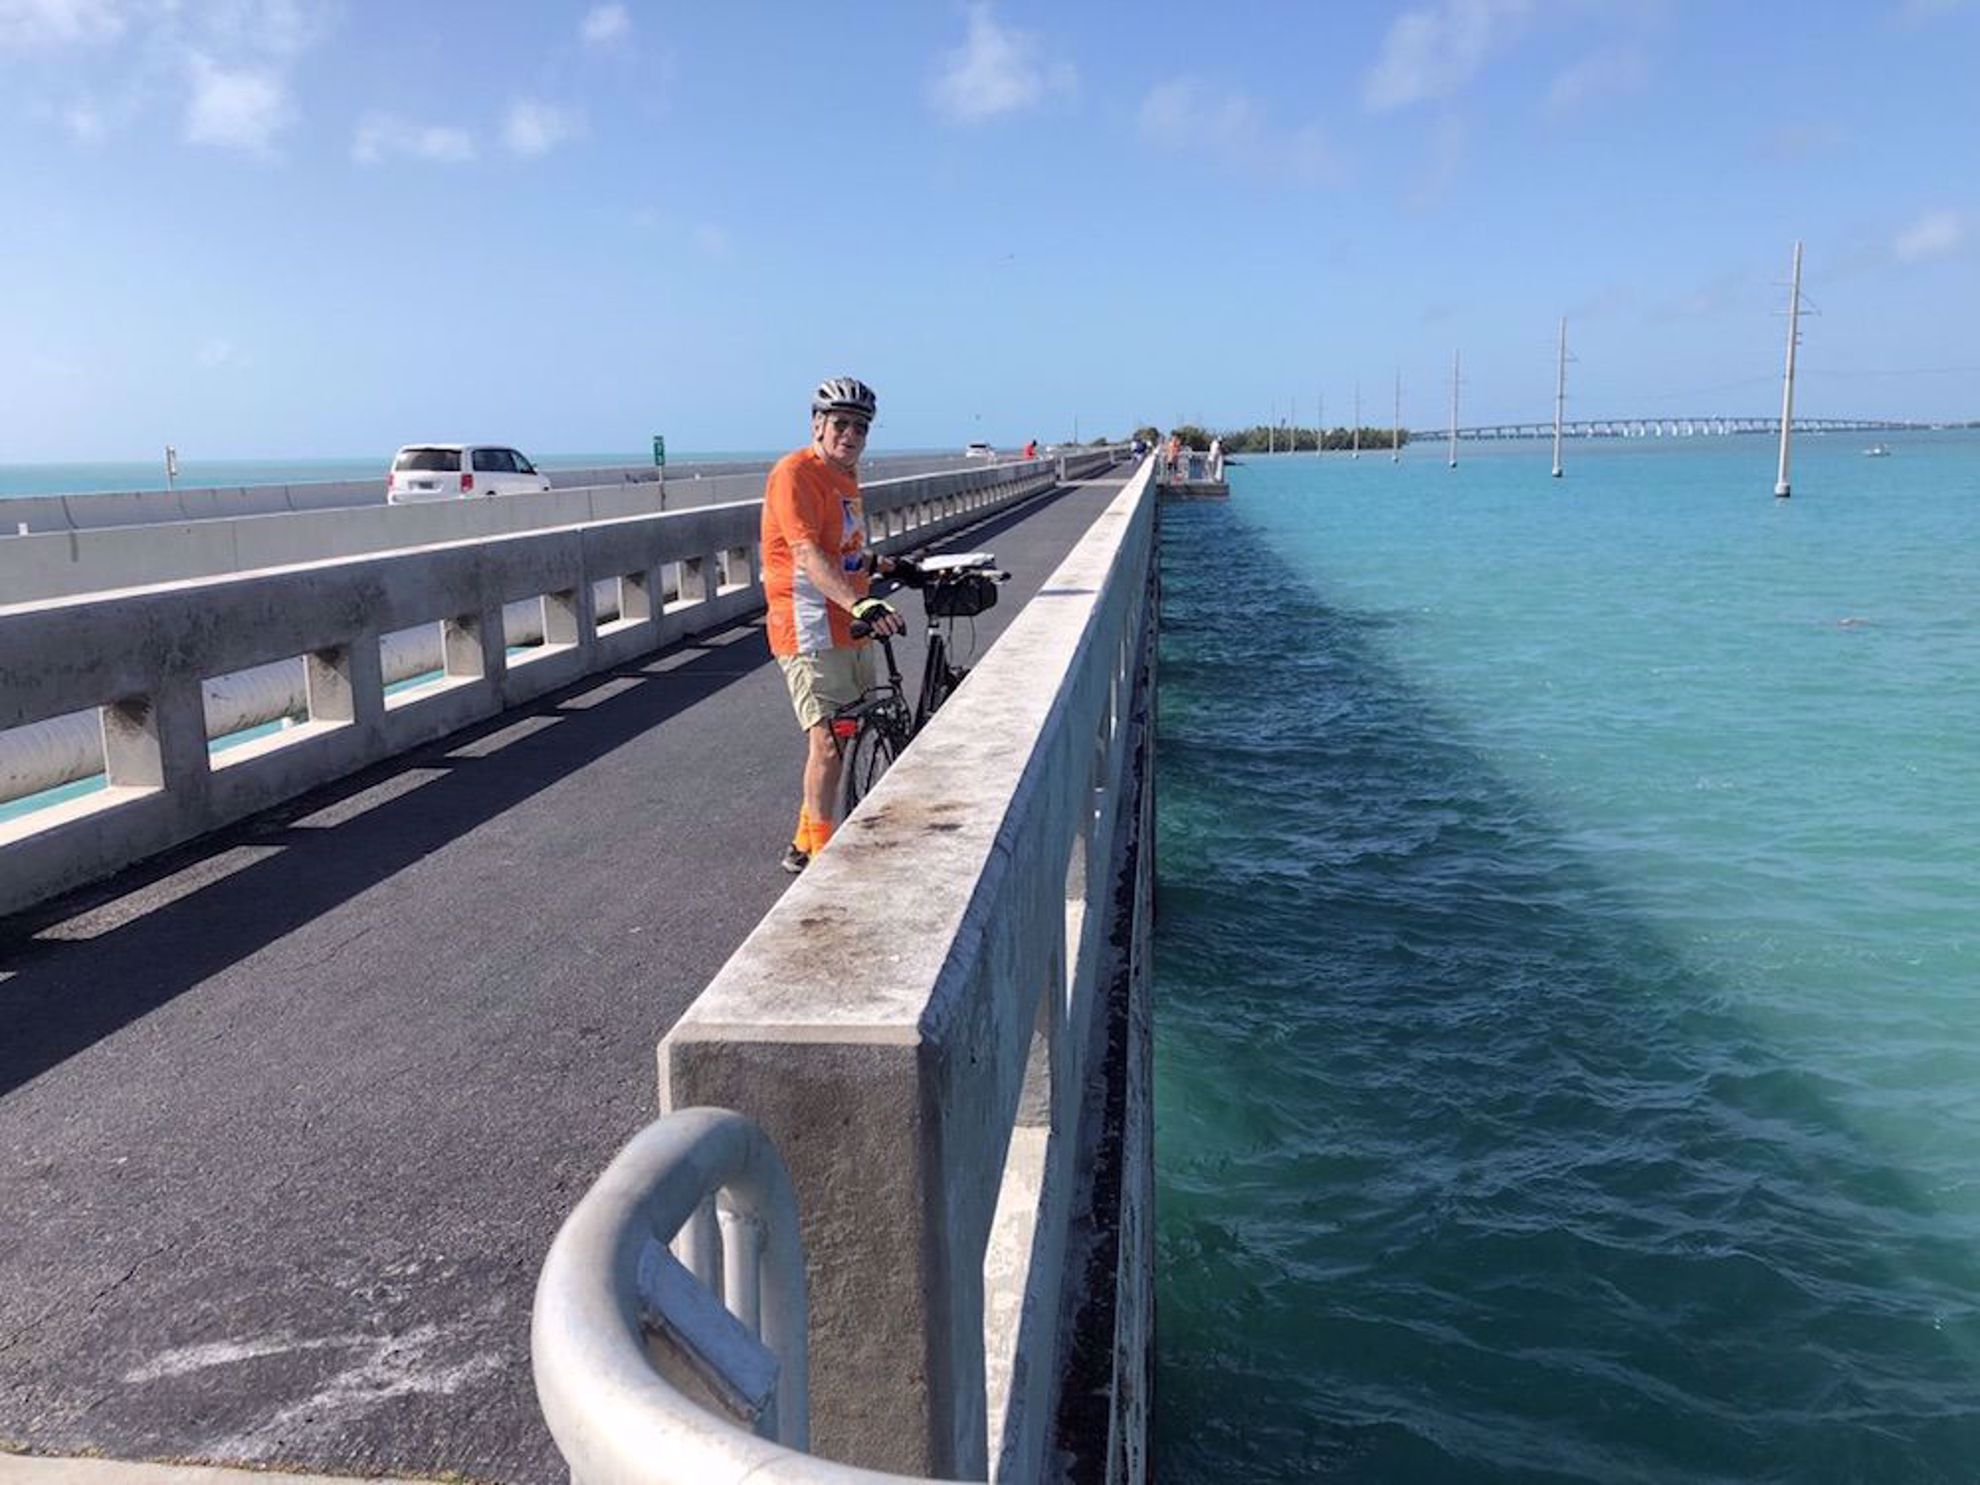 Bike path across bridge in the Florida Keys